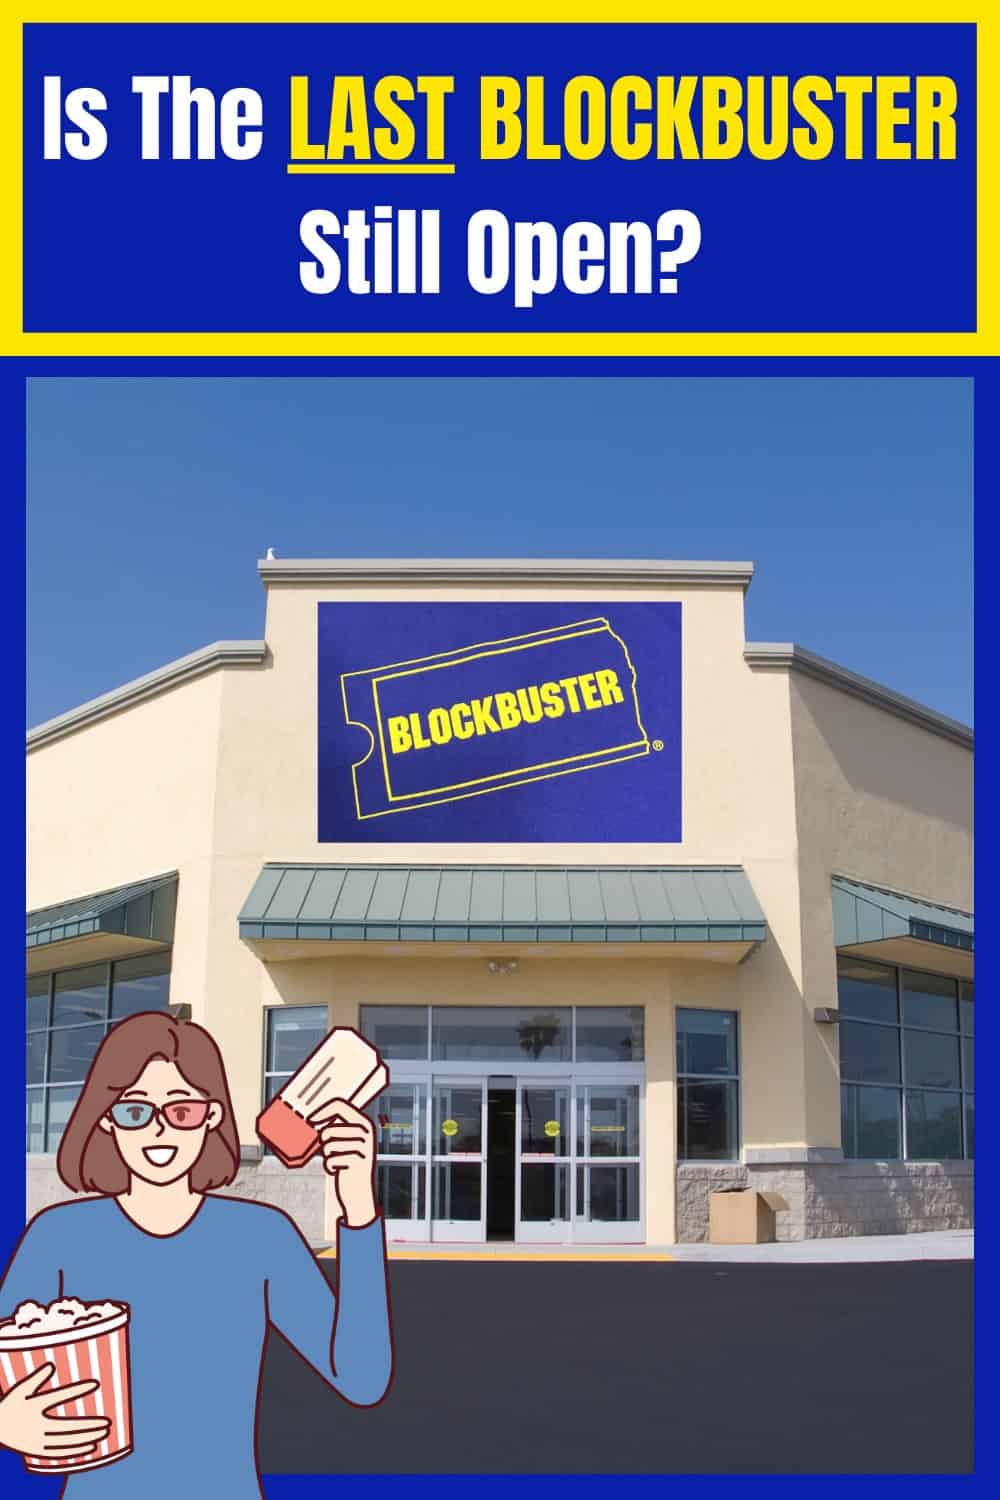 Yes the last Blockbuster is still open